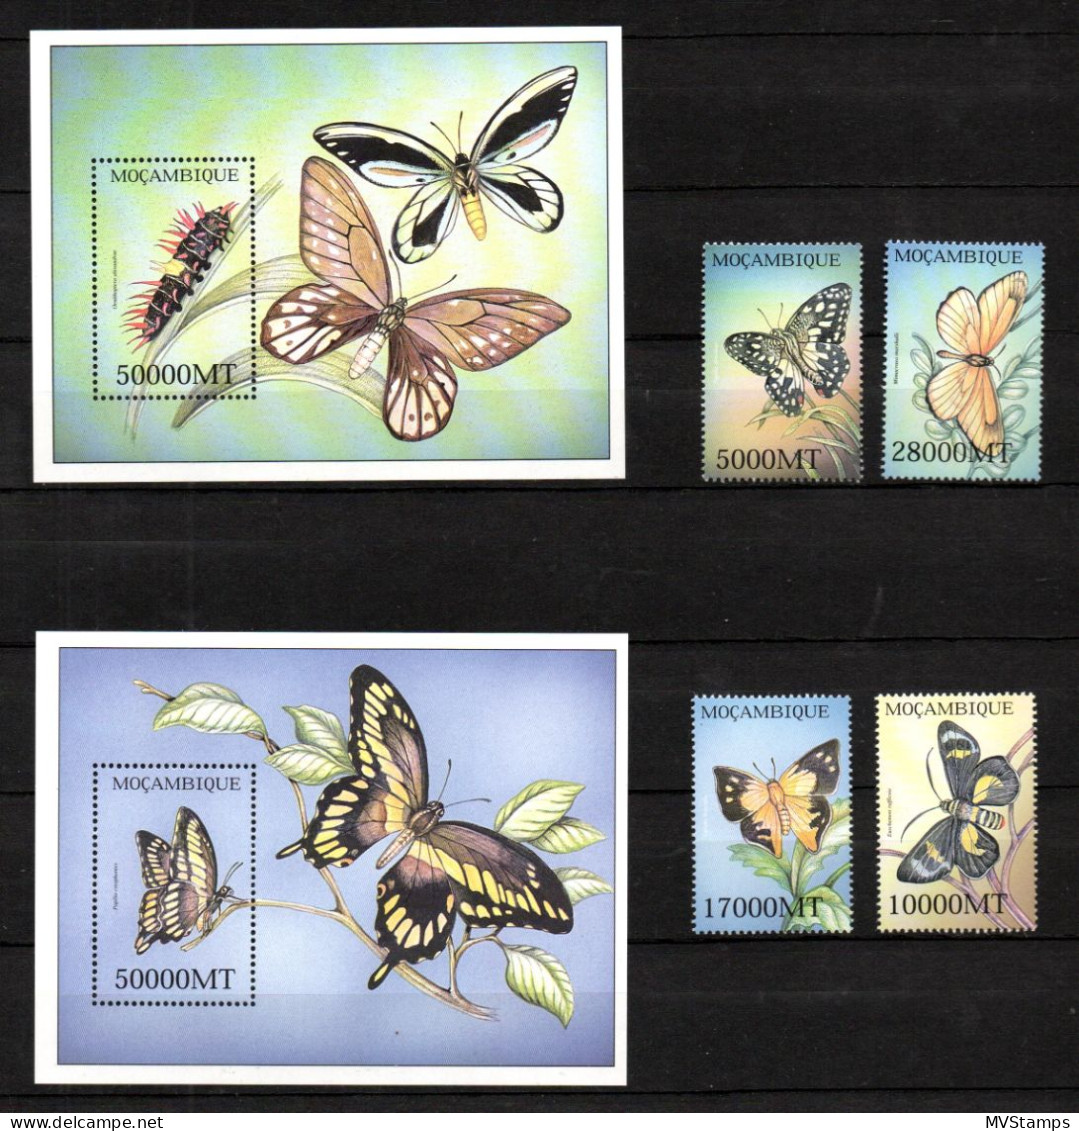 Mocambique 2002 Sheet Butterflies/Schmetterling Stamps (Michel 2302/05 + Bl.138/39) MNH - Mozambique